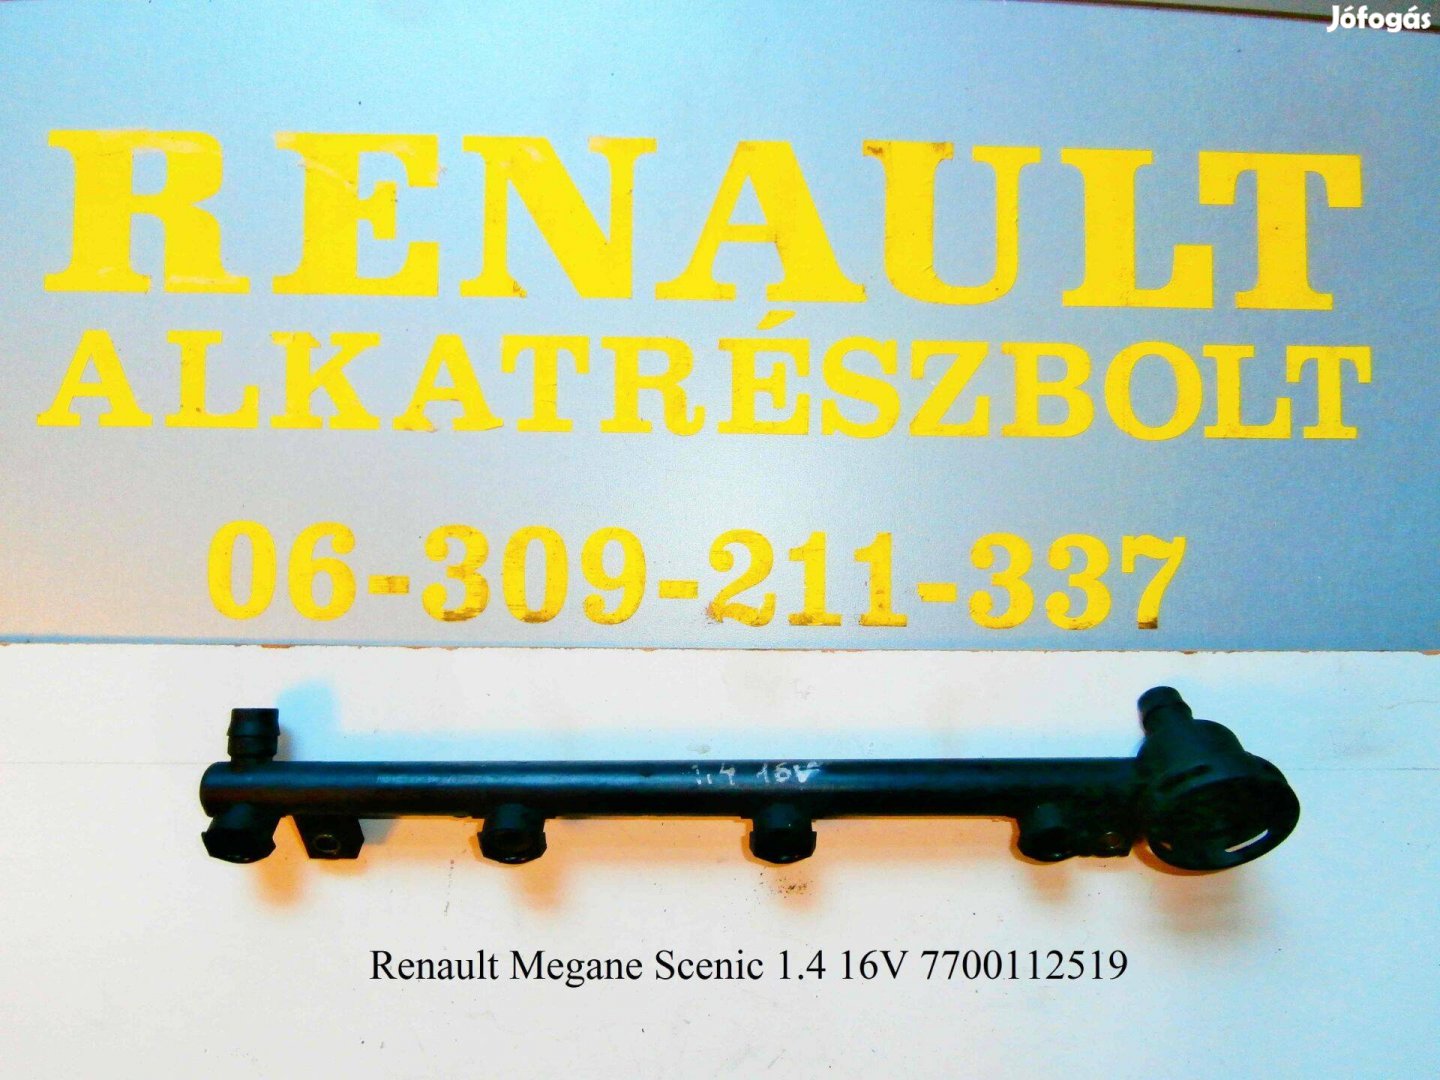 Renault Megane Scenic 1.4 16V 7700112519 injektor híd